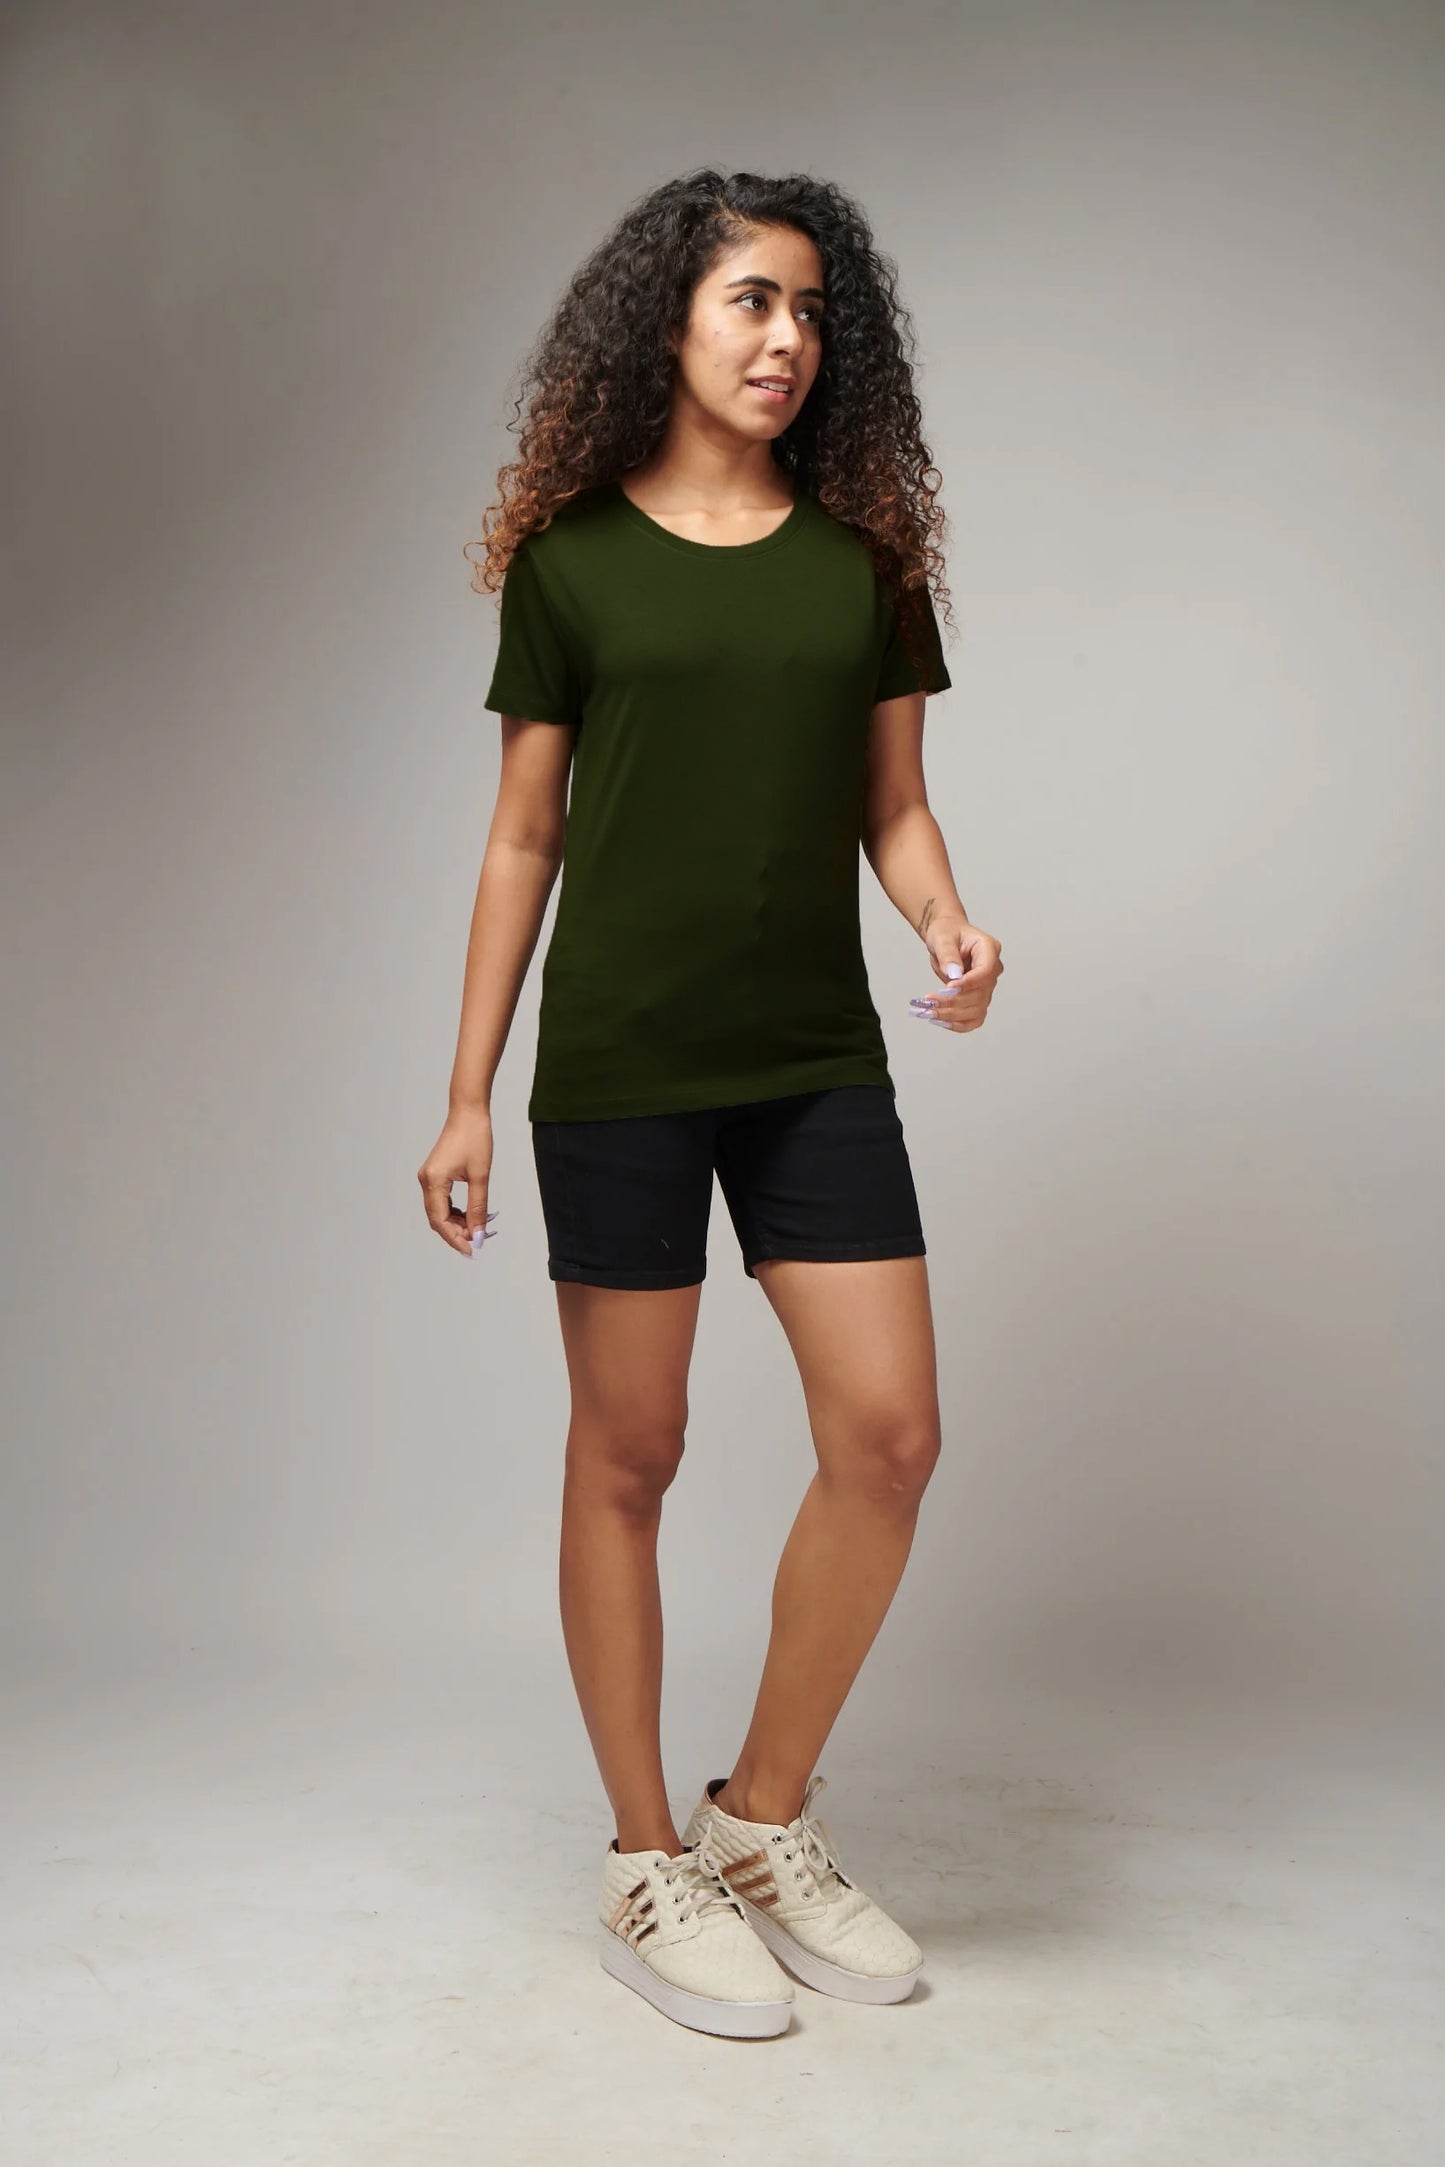 Women's Basic Olive Green Half Sleeves T-Shirt